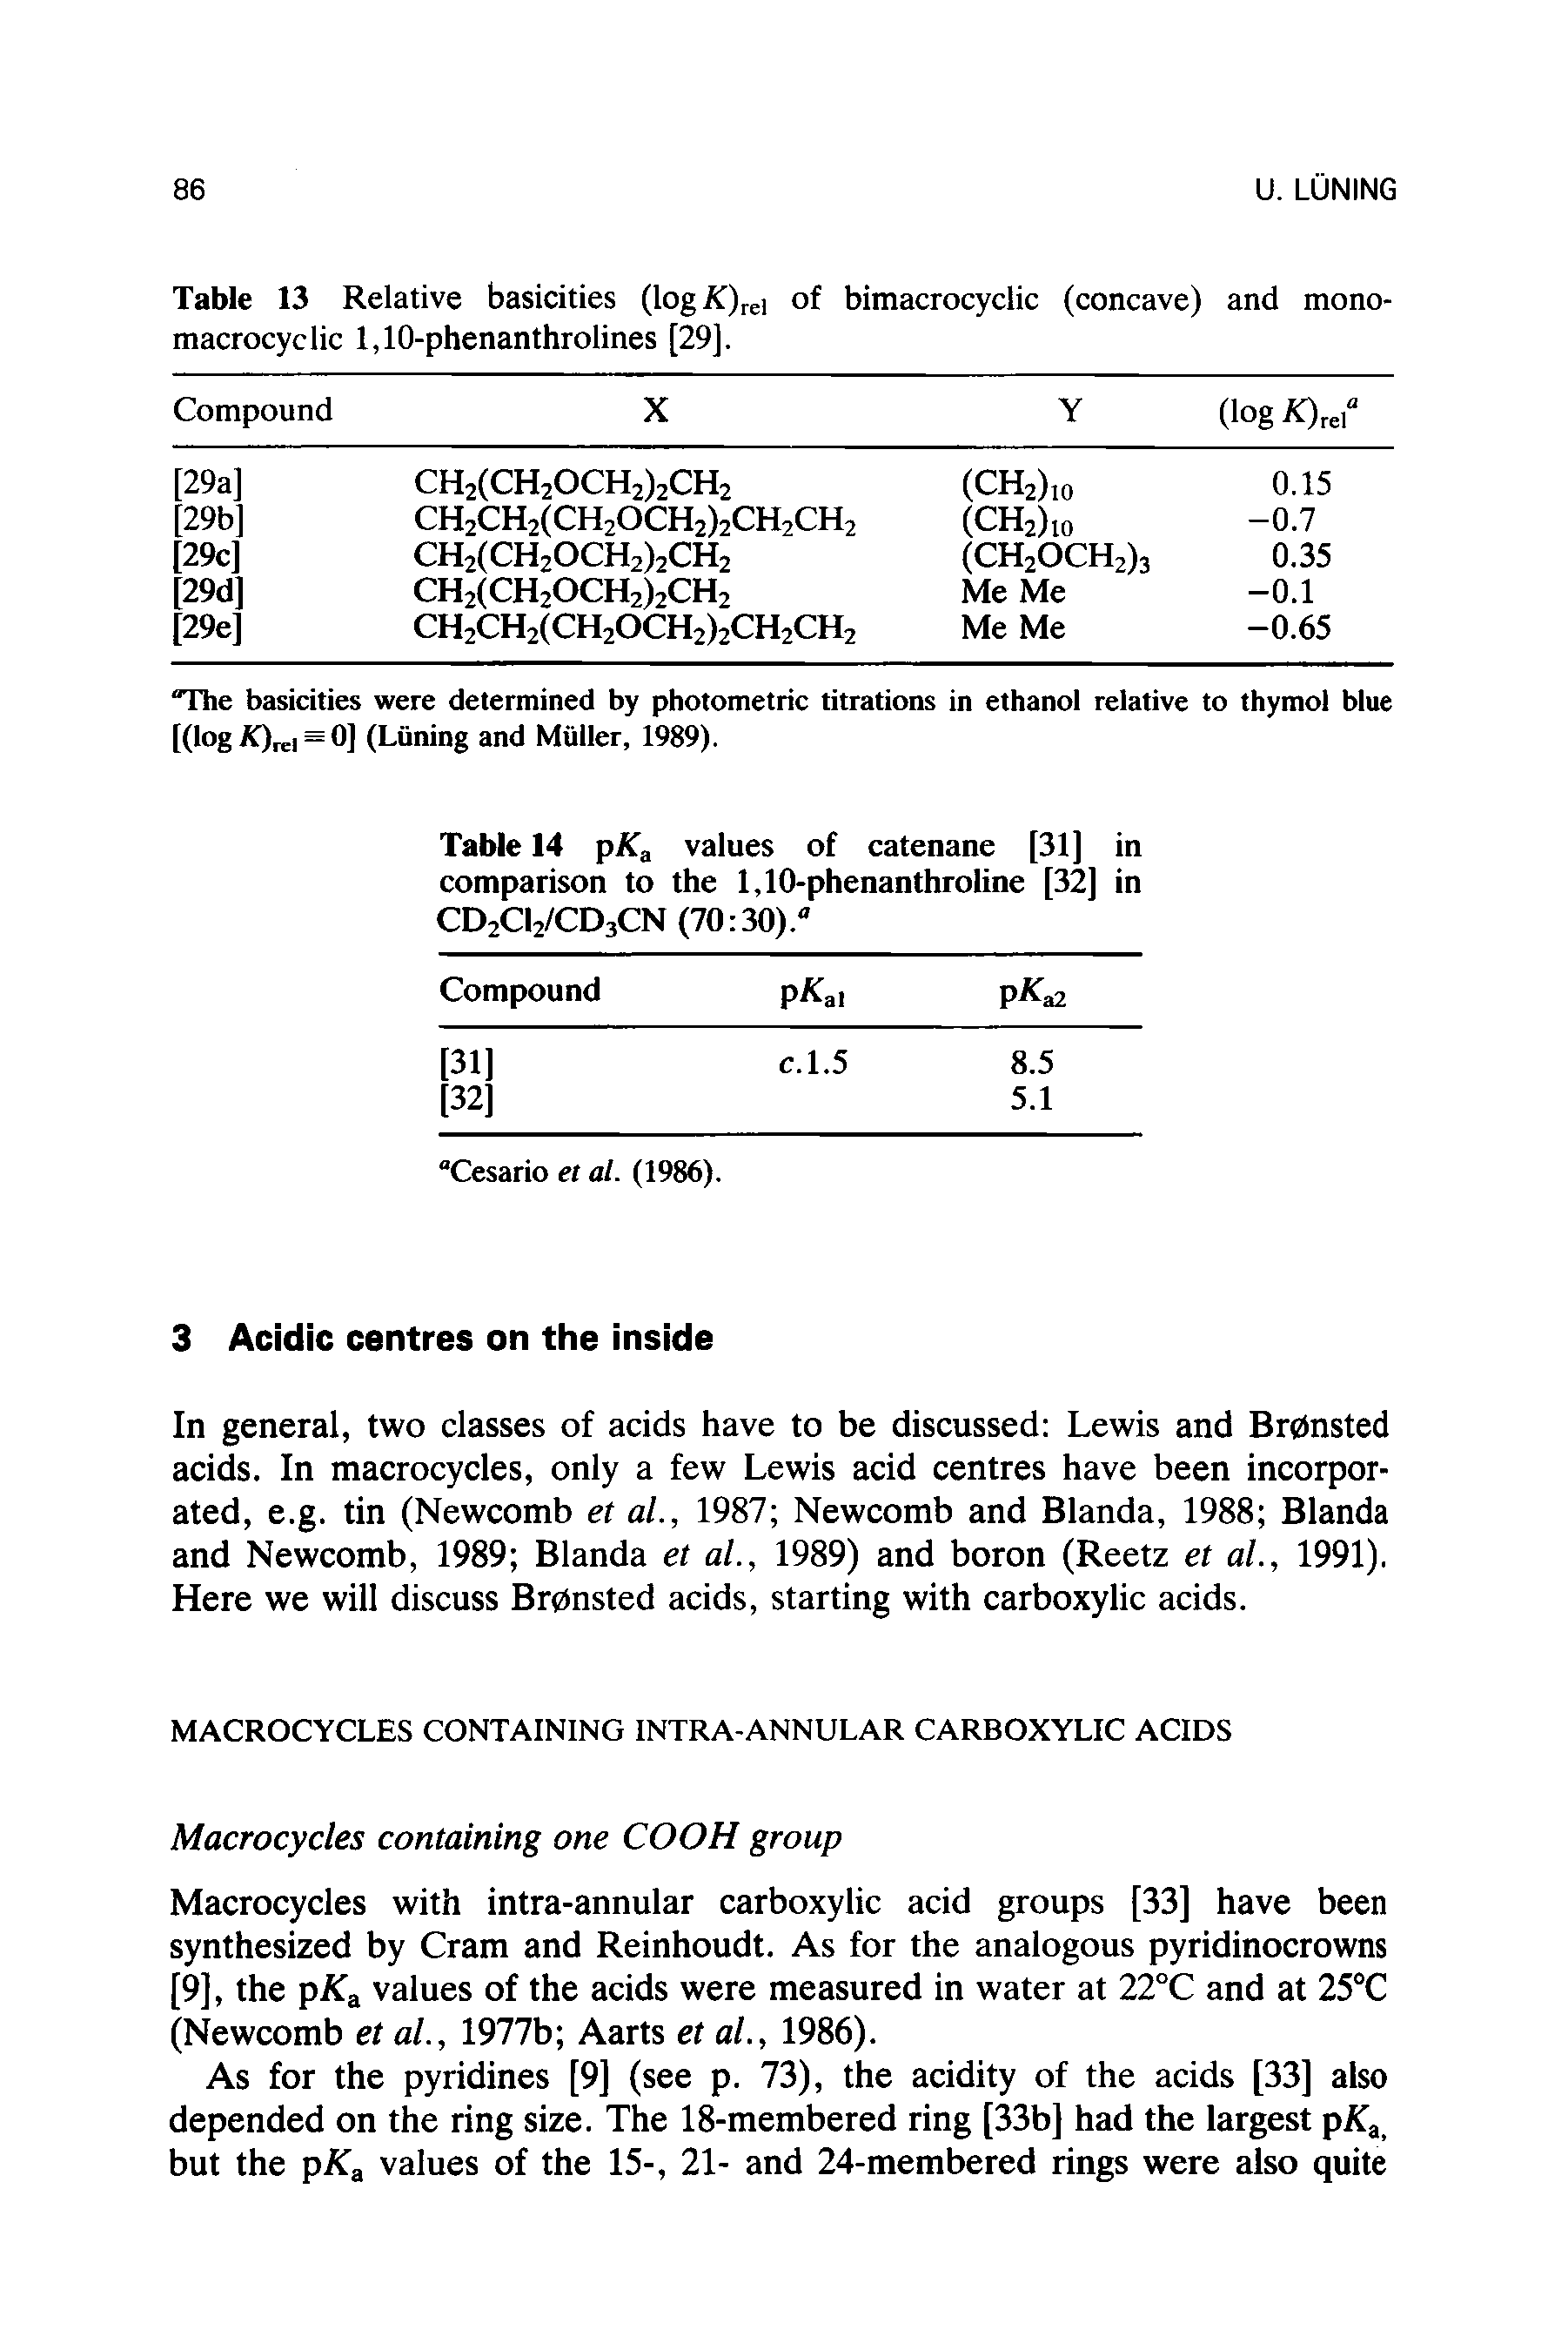 Table 13 Relative basicities (log )rei of bimacrocyclic (concave) and mono-macrocyclic 1,10-phenanthrolines [29].